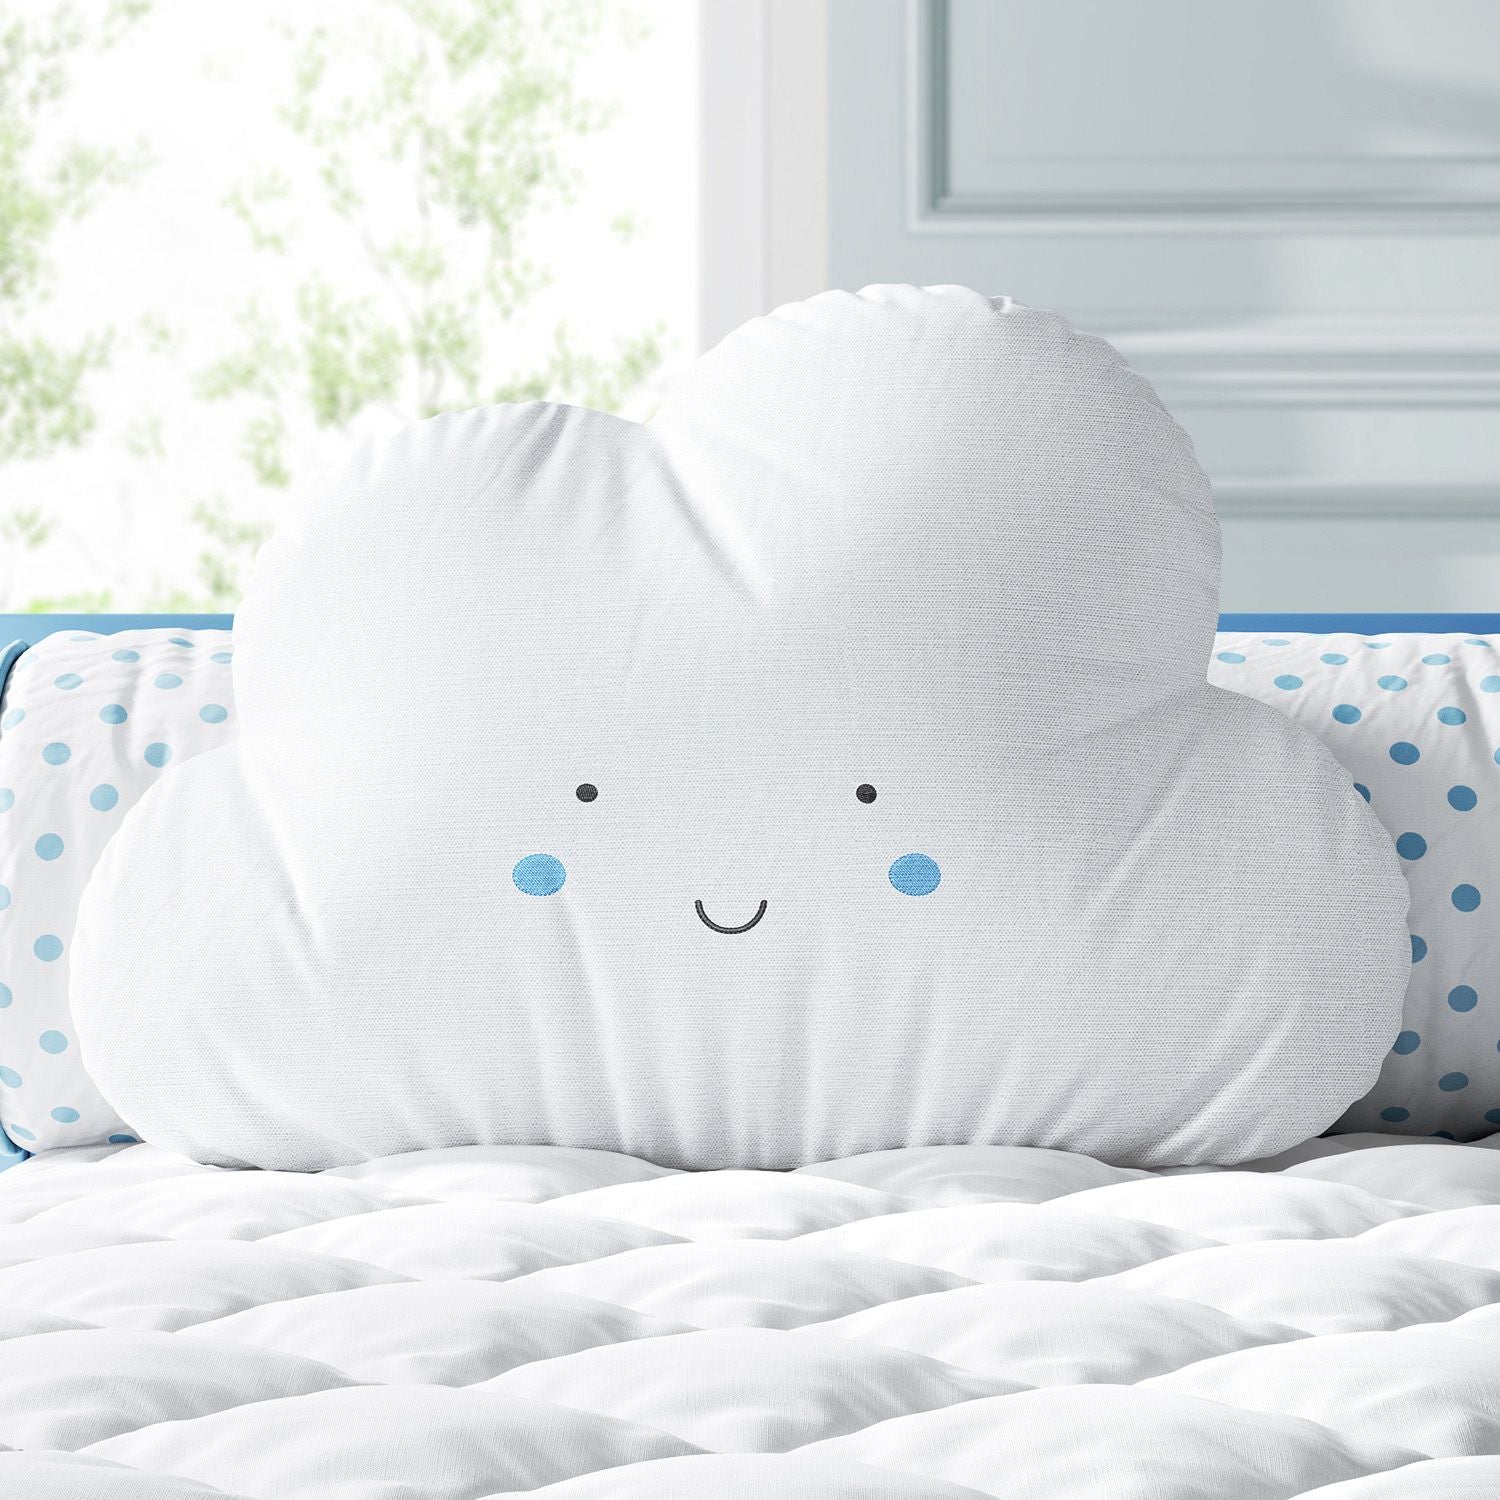 Blue and White Fluffy Cloud Cushion 15